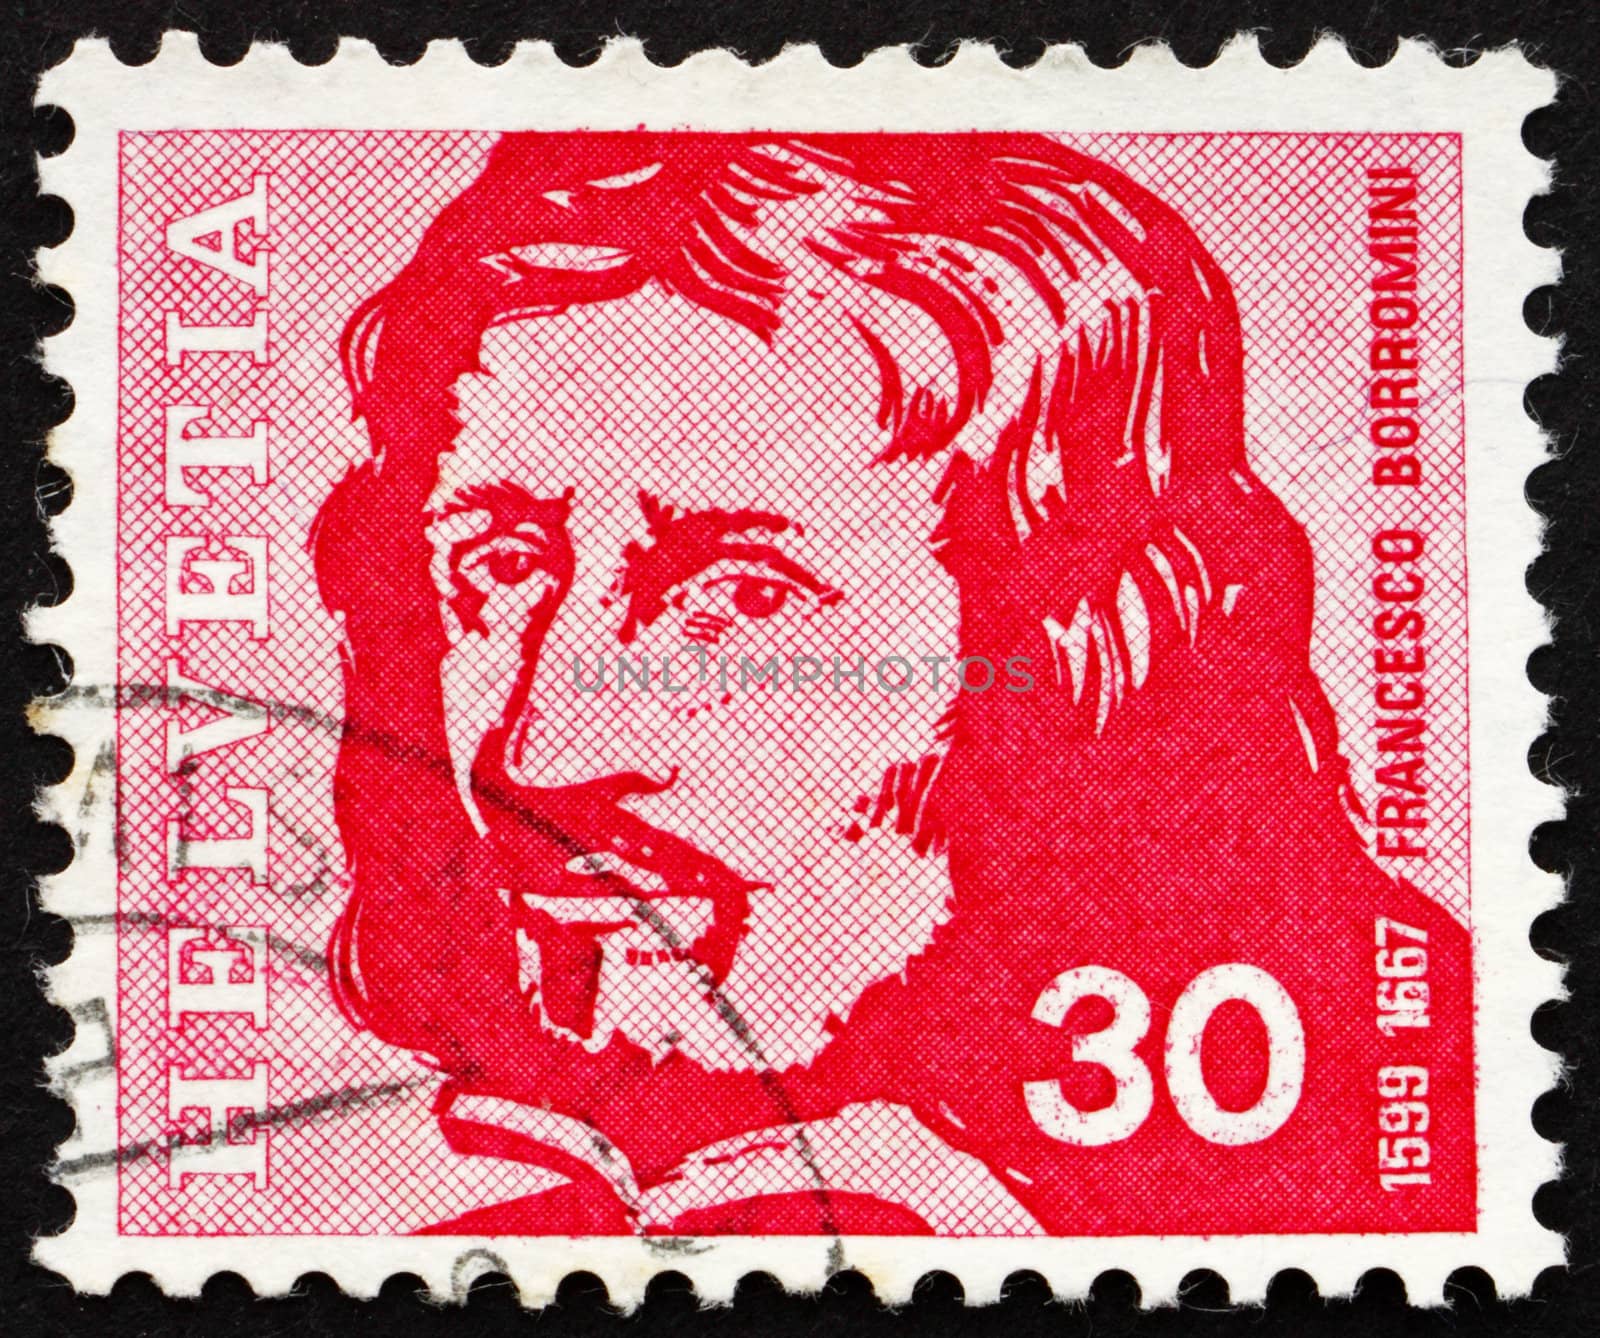 SWITZERLAND - CIRCA 1969: a stamp printed in the Switzerland shows Francesco Borromini, Architect, circa 1969